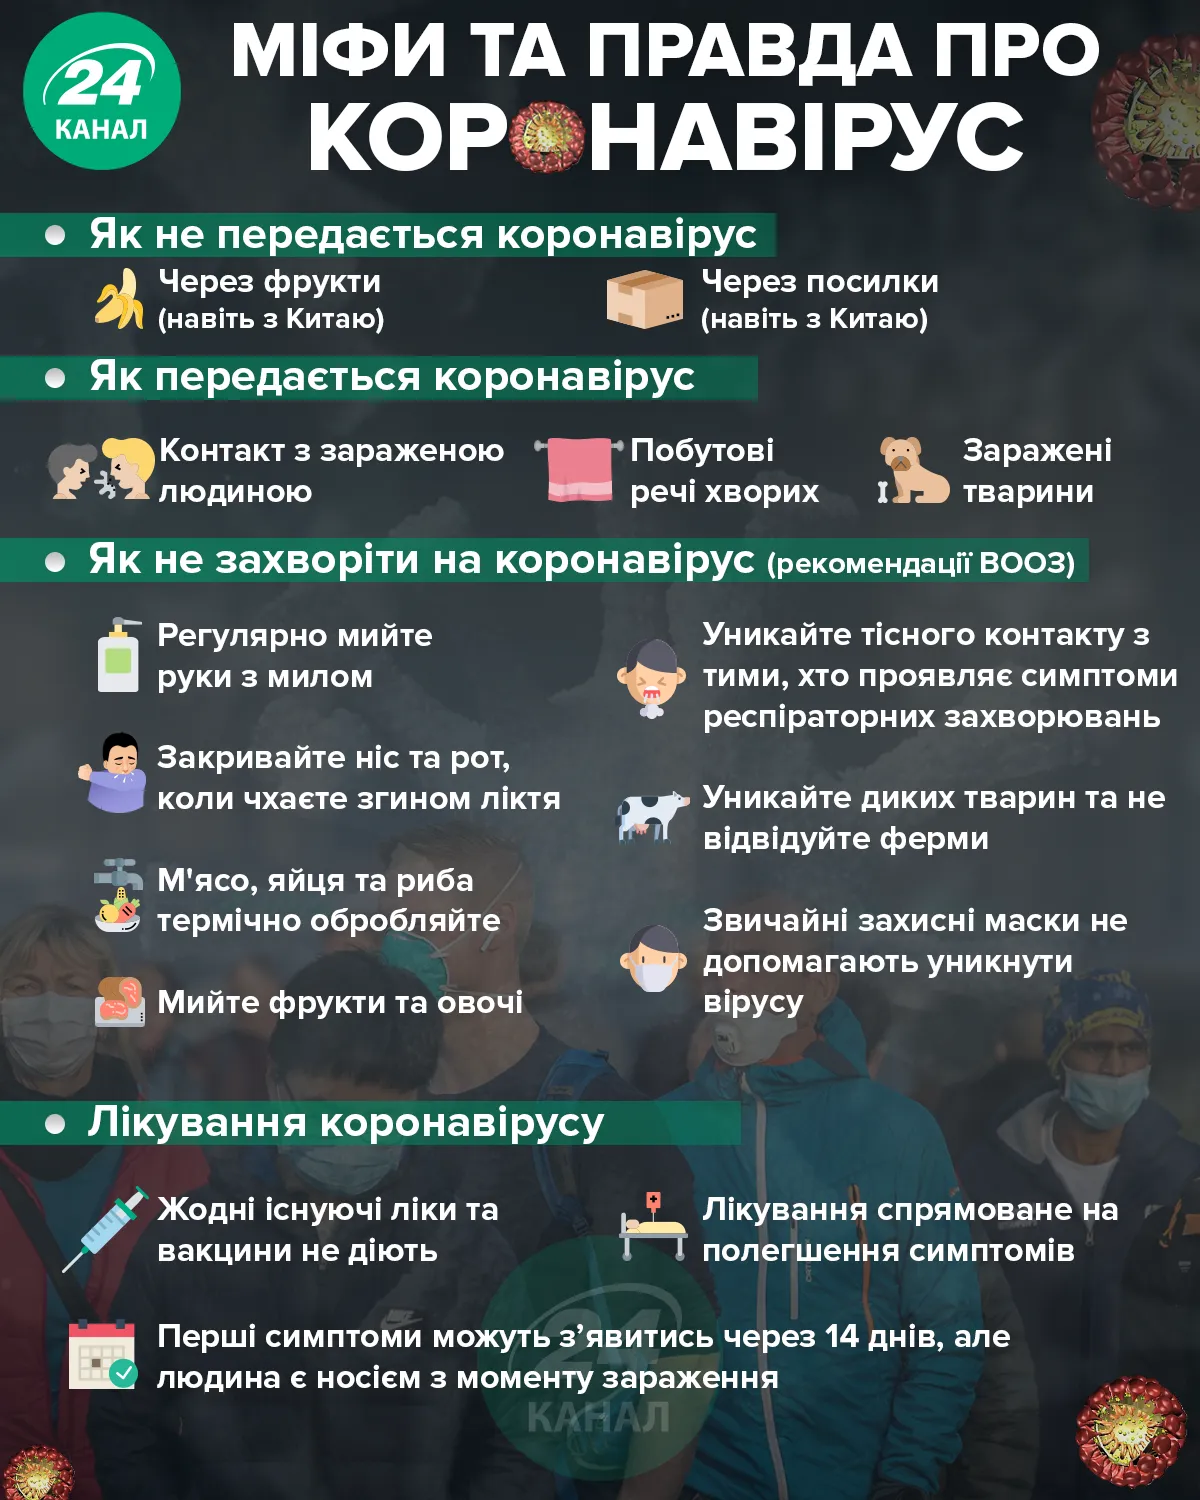 Мифы и правда про коронавирус / Картинка 24 канала